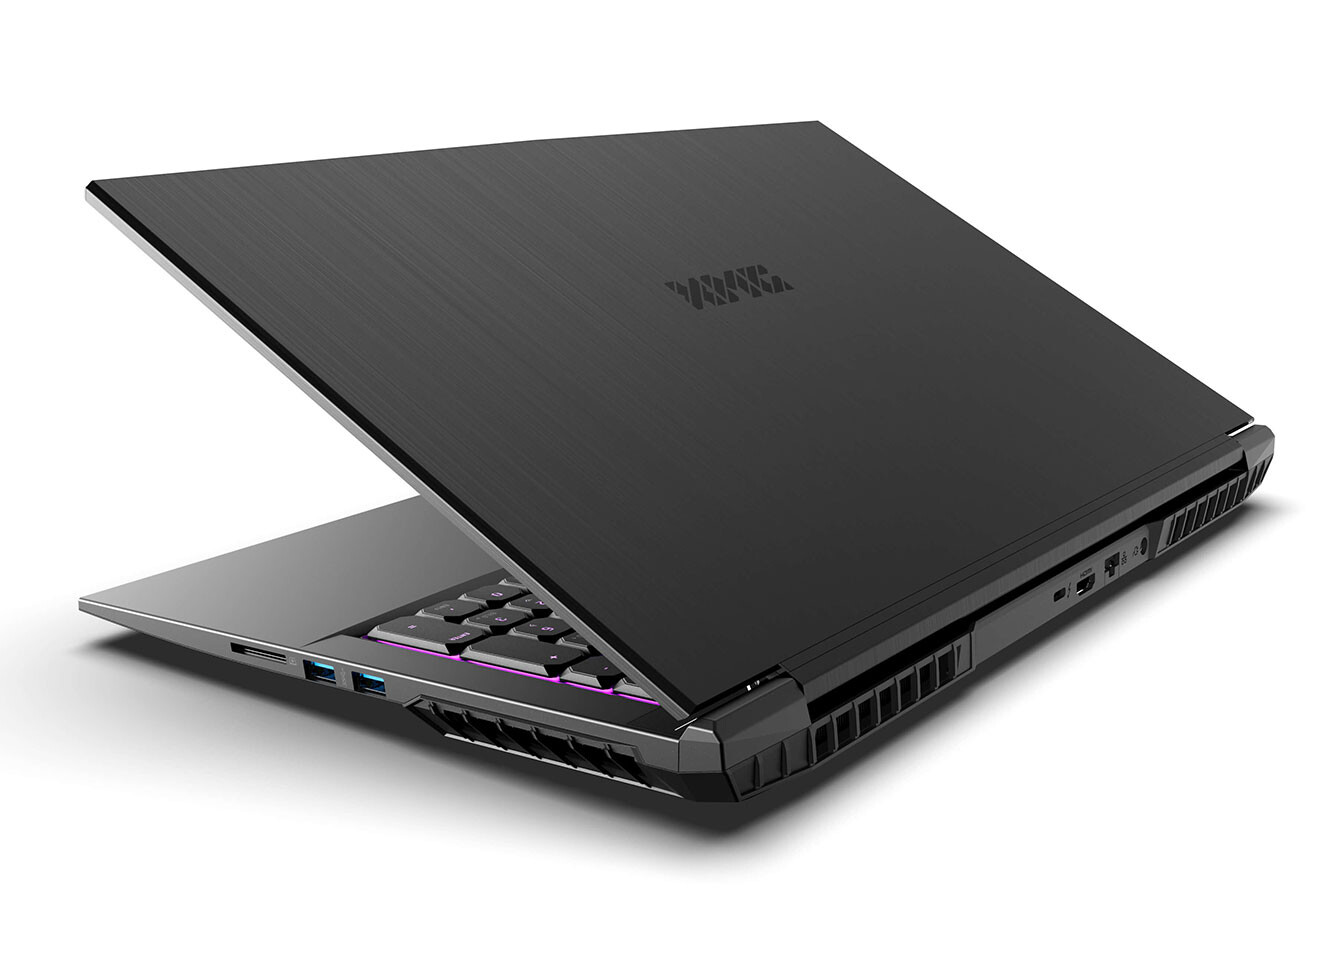 XMG دو لپ تاپ گیمینگ از سری NEO معرفی کرد